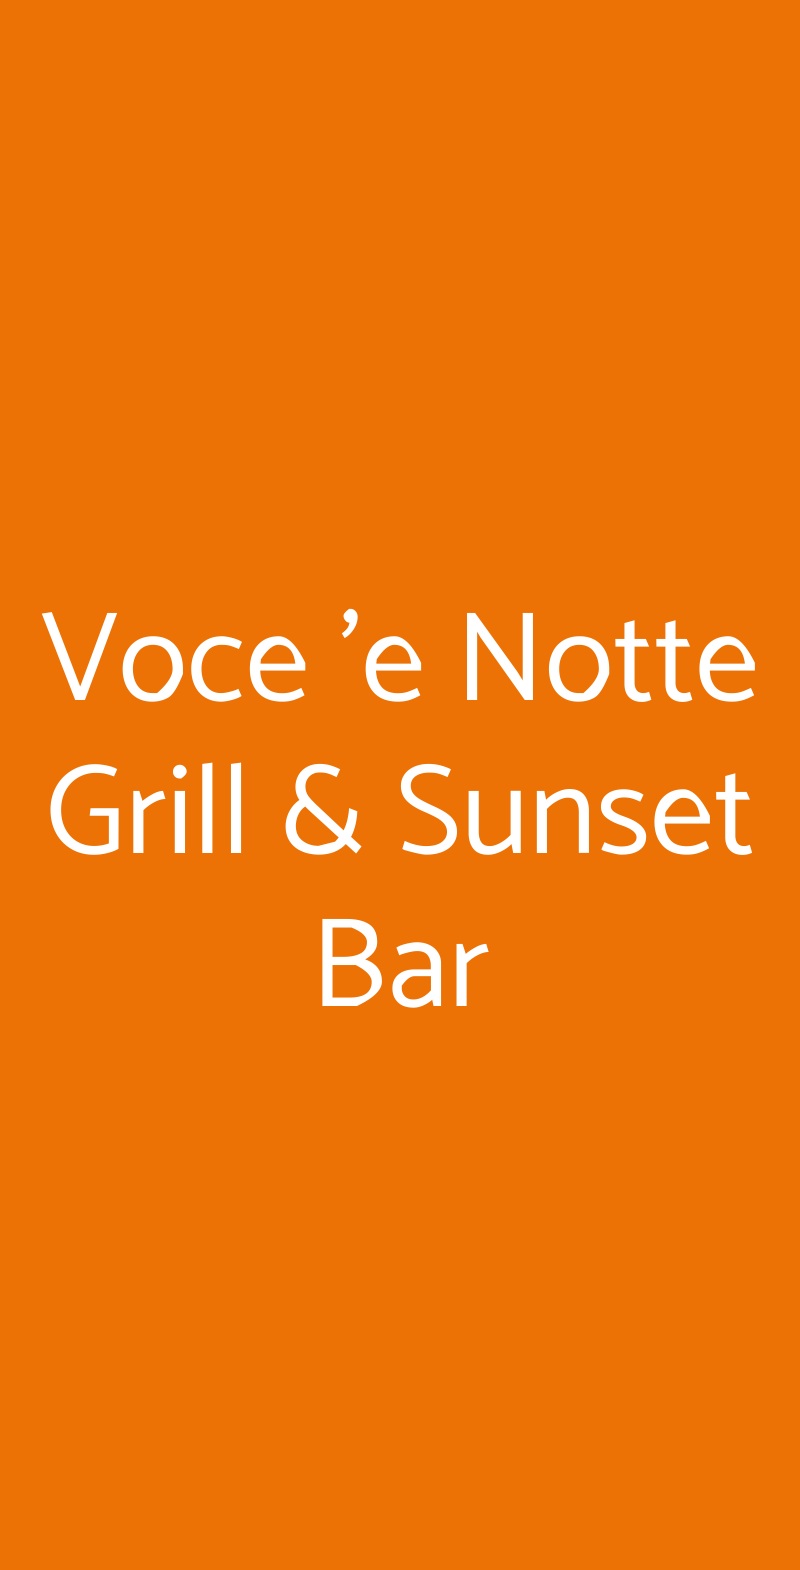 Voce 'e Notte Grill & Sunset Bar Praiano menù 1 pagina